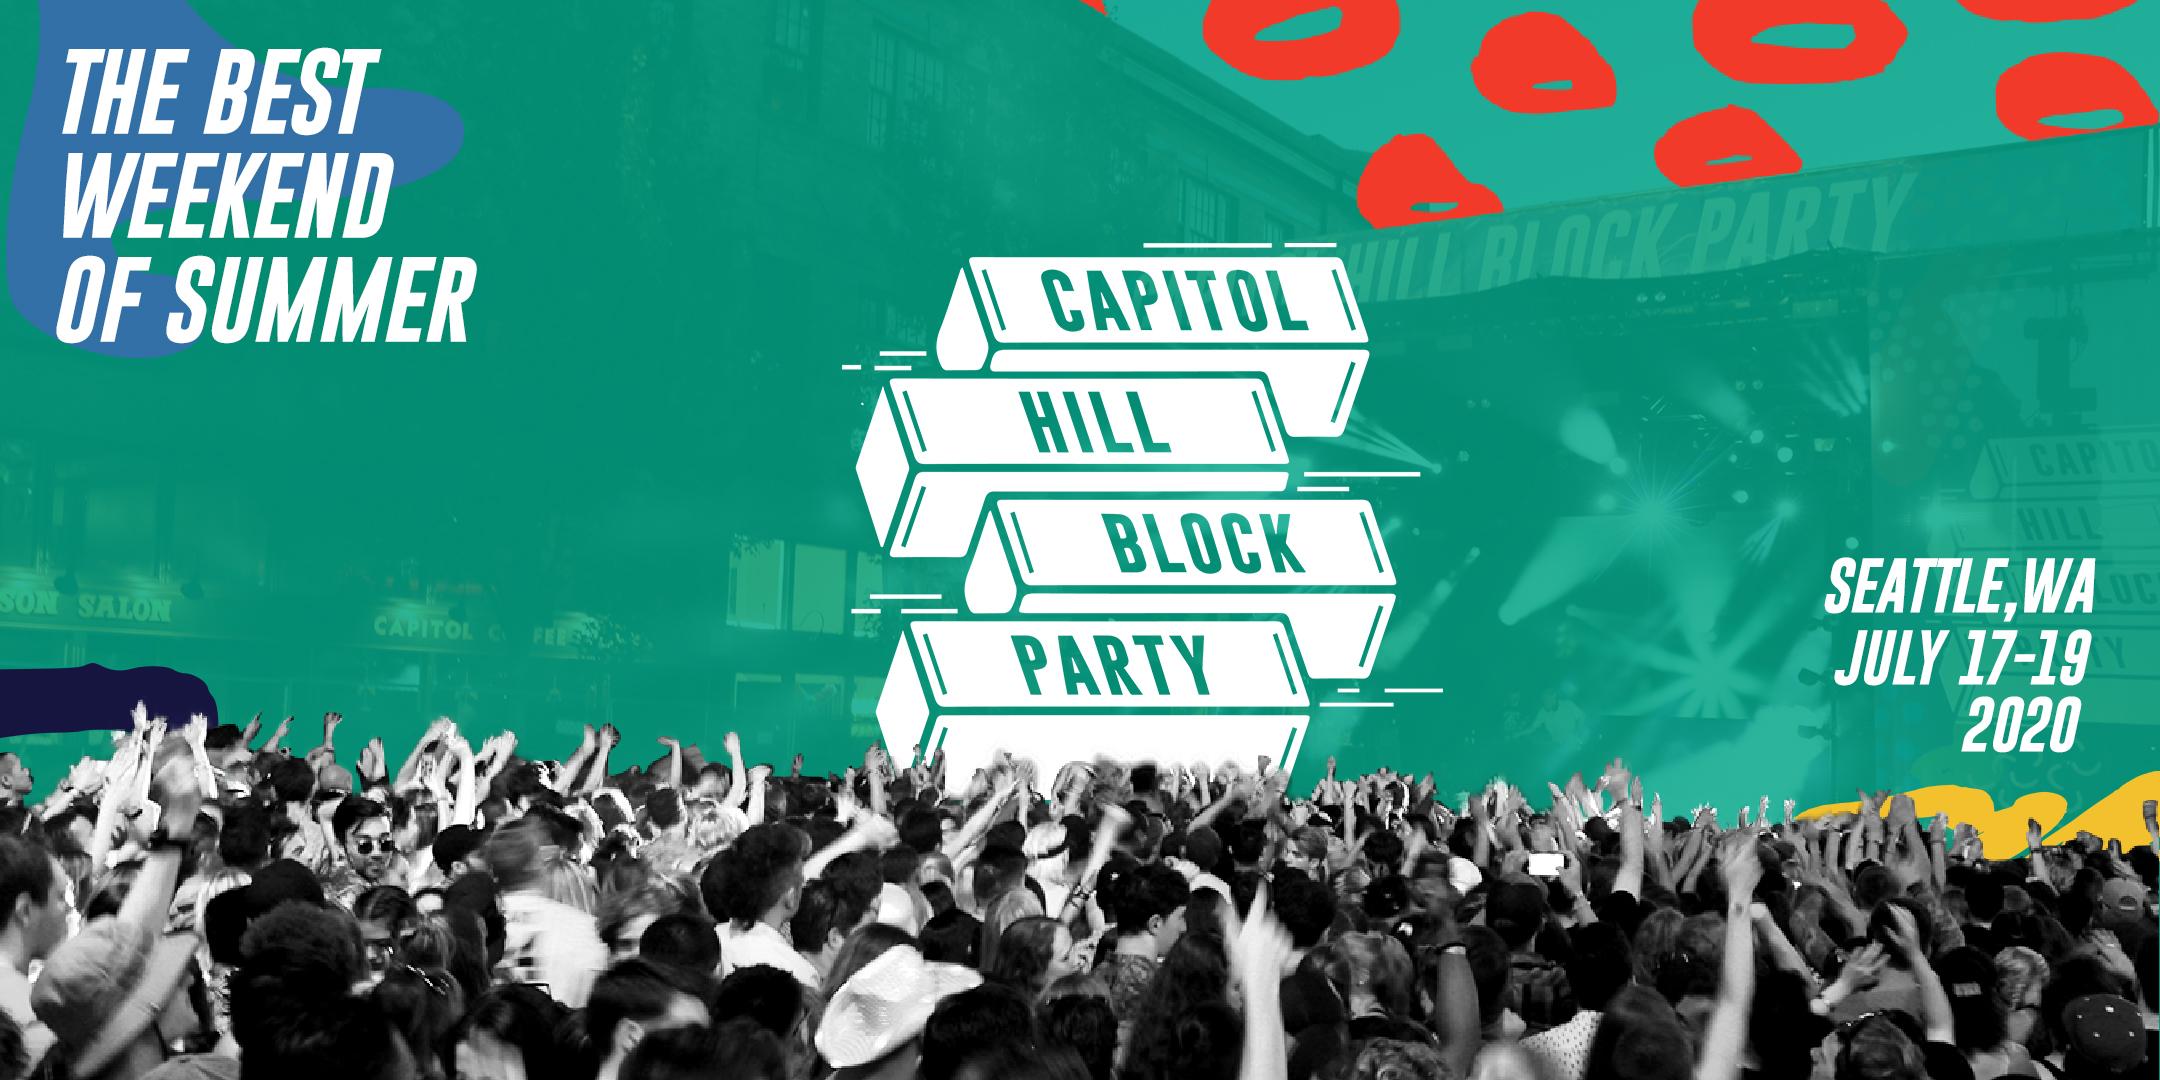 CAPITOL HILL BLOCK PARTY 2020